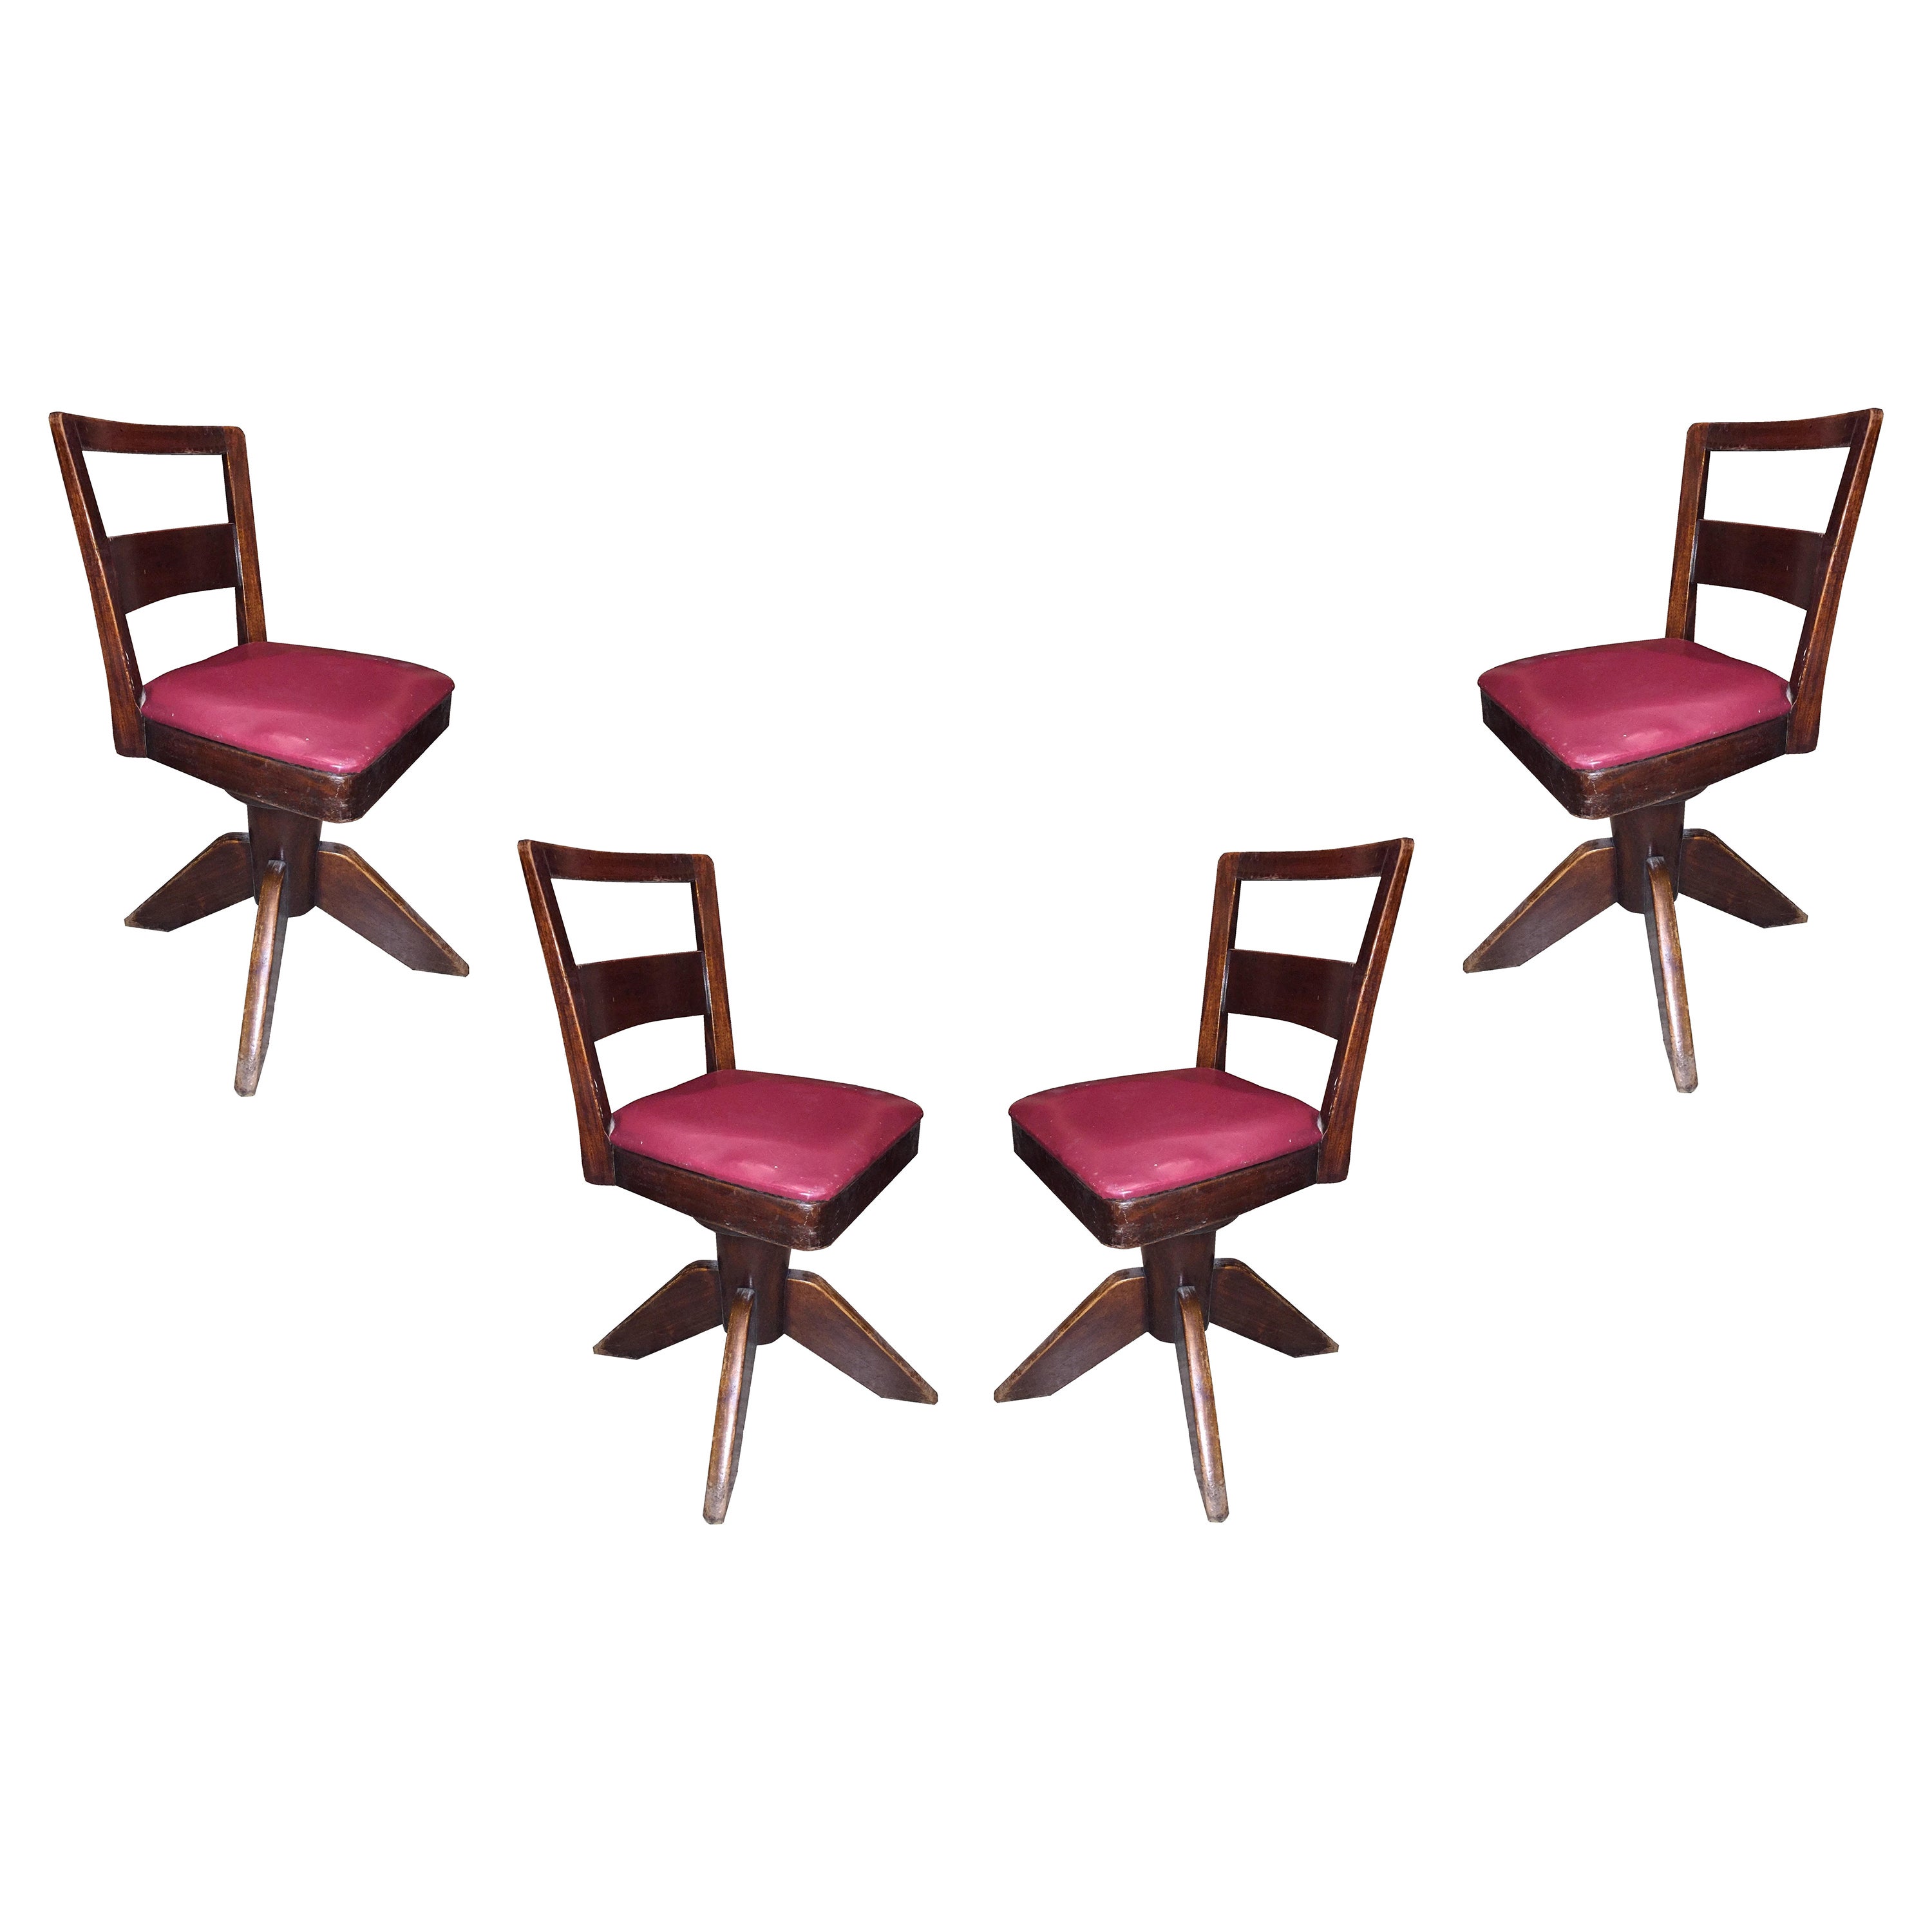 4 Chair, Italian, 1950